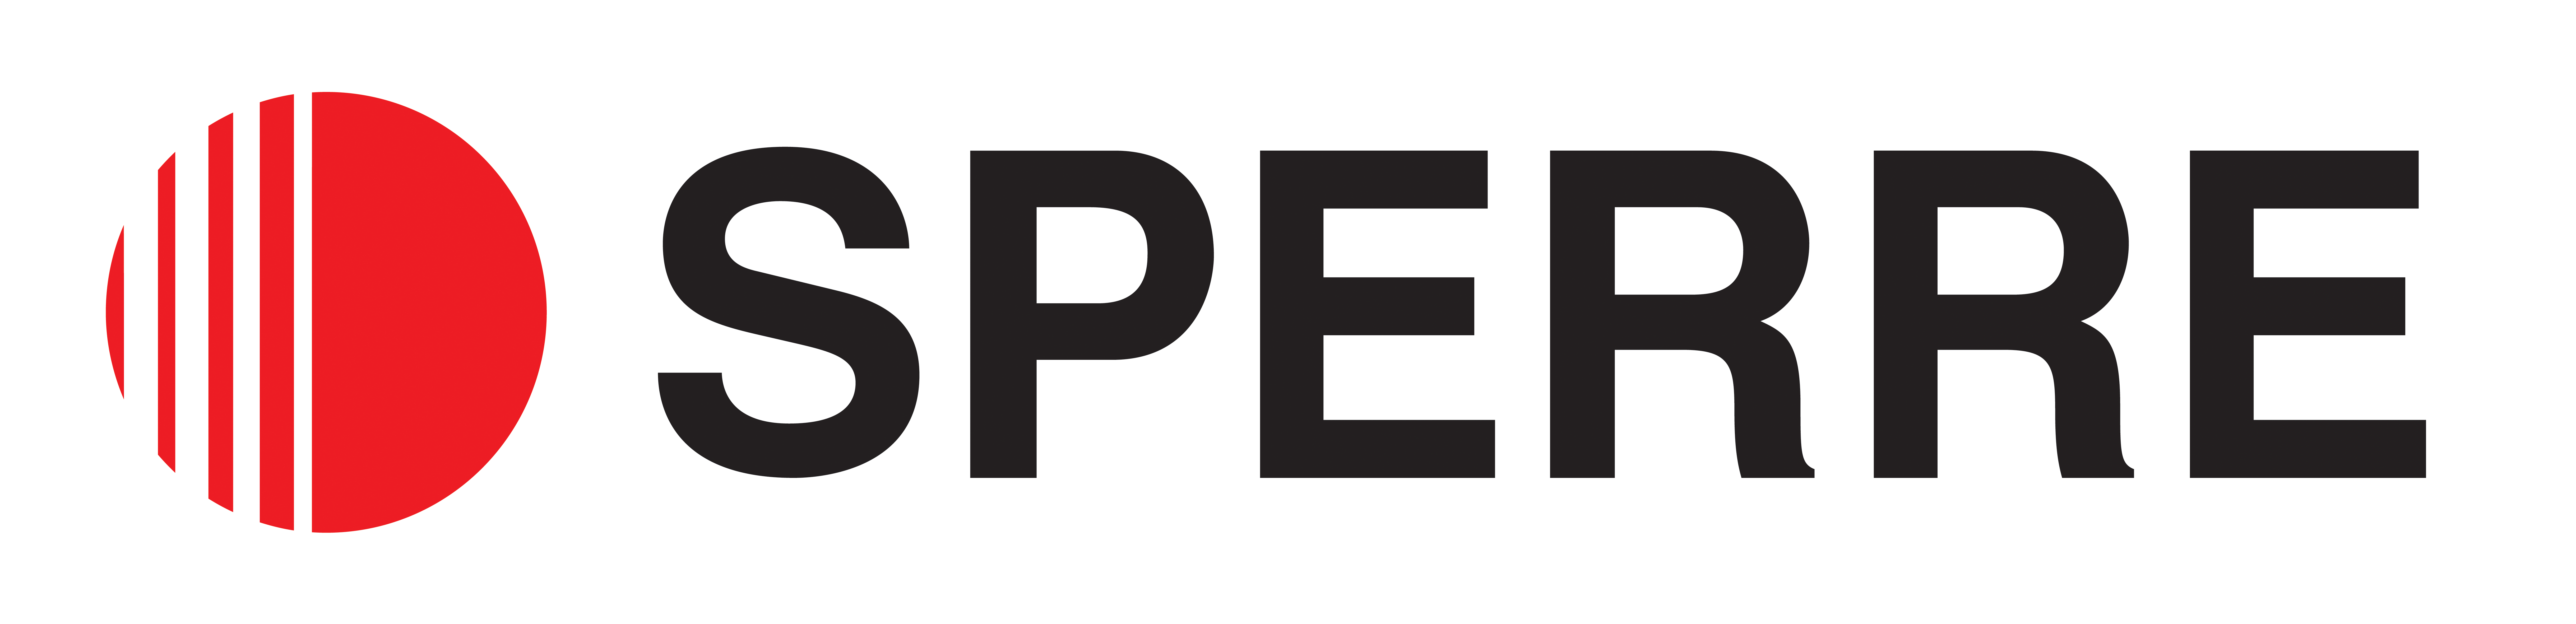 Sperre Industri Logo